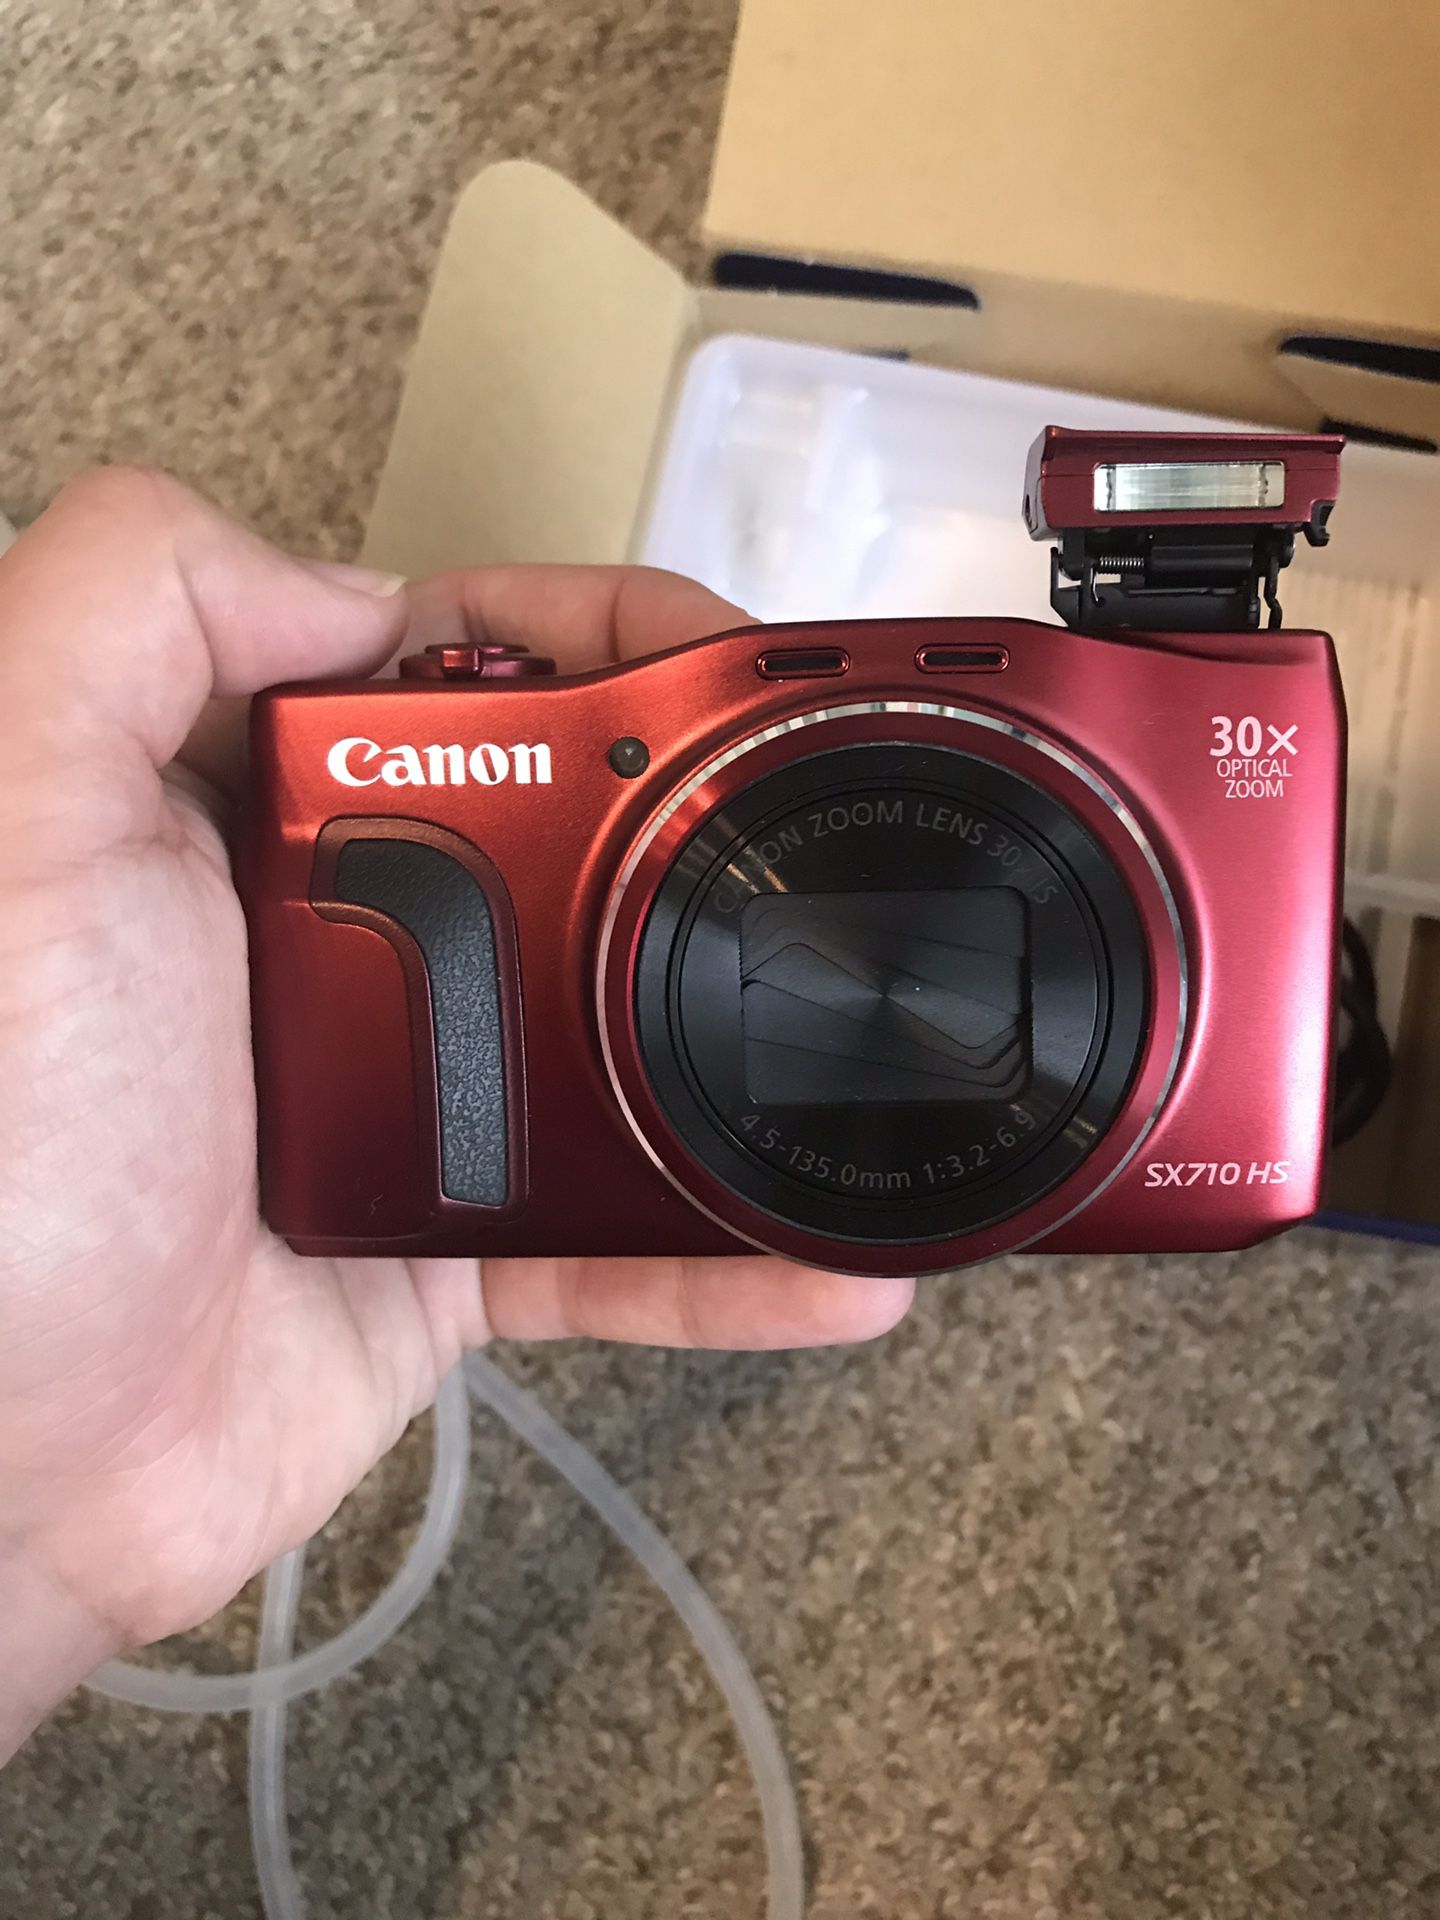 Canon PowerShot SX710 HS digital camera